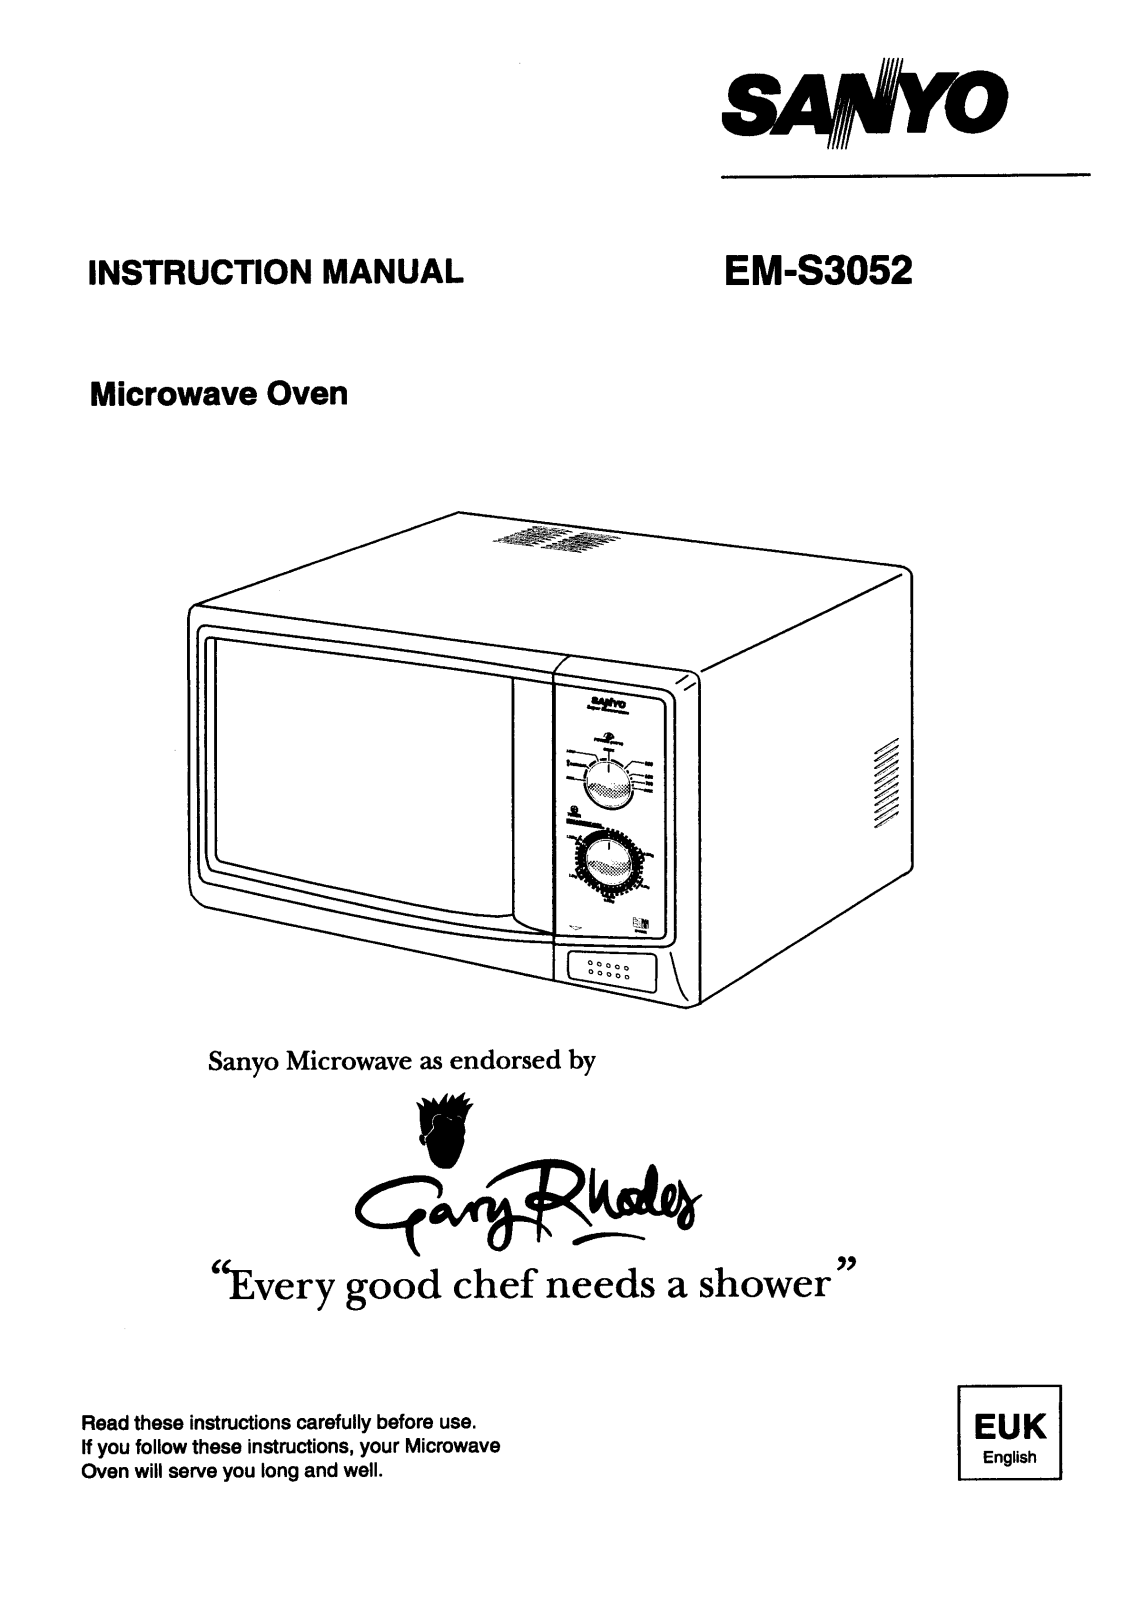 Sanyo EM-S3052 Instruction Manual